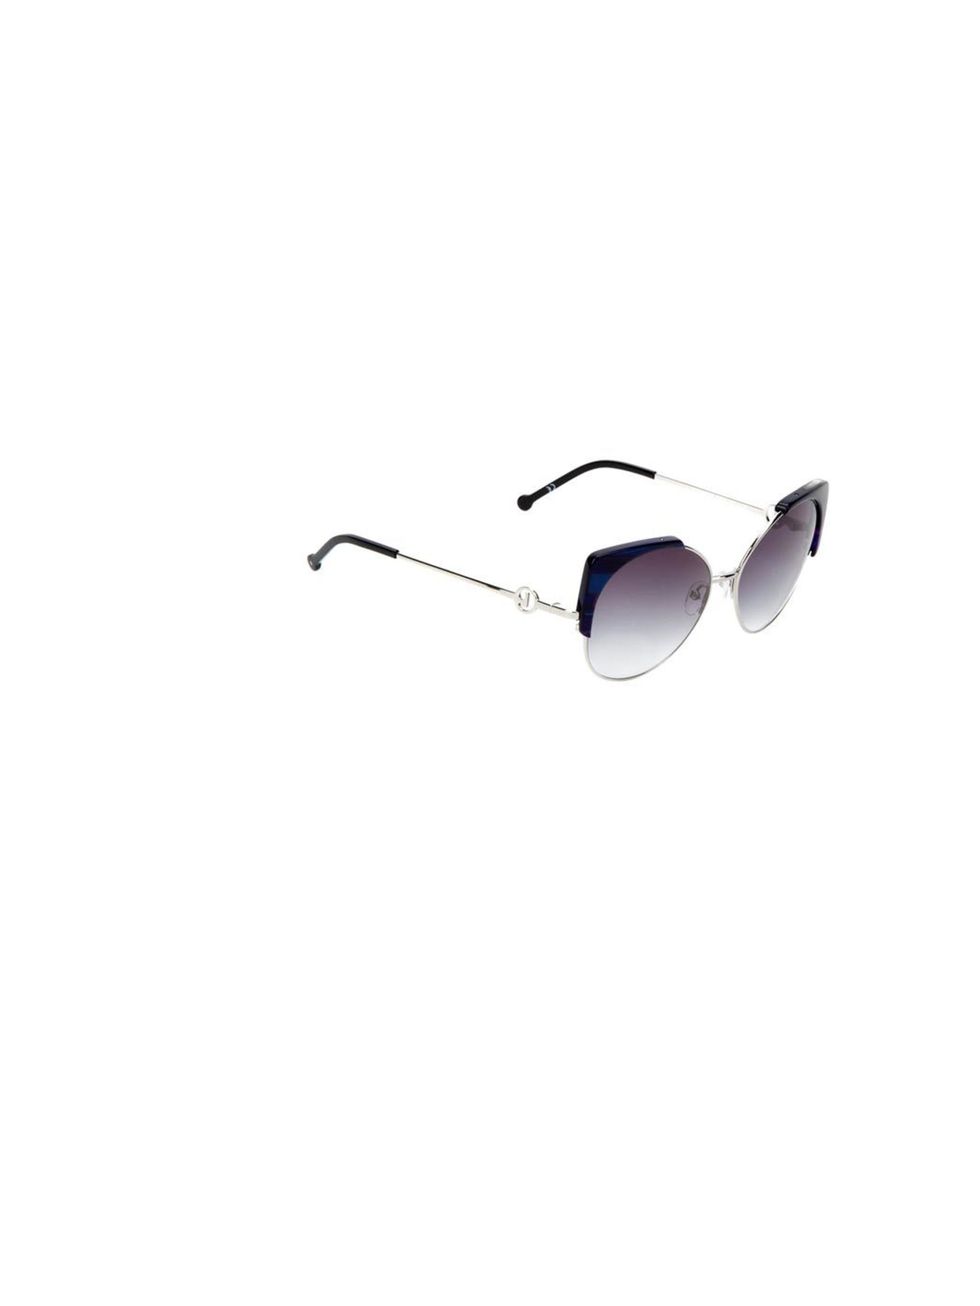 <p>Carven 'Odette' sunglasses, £166, at <a href="http://www.farfetch.com/shopping/women/carven-odette-sunglasses-item-10231532.aspx">Farfetch</a></p>